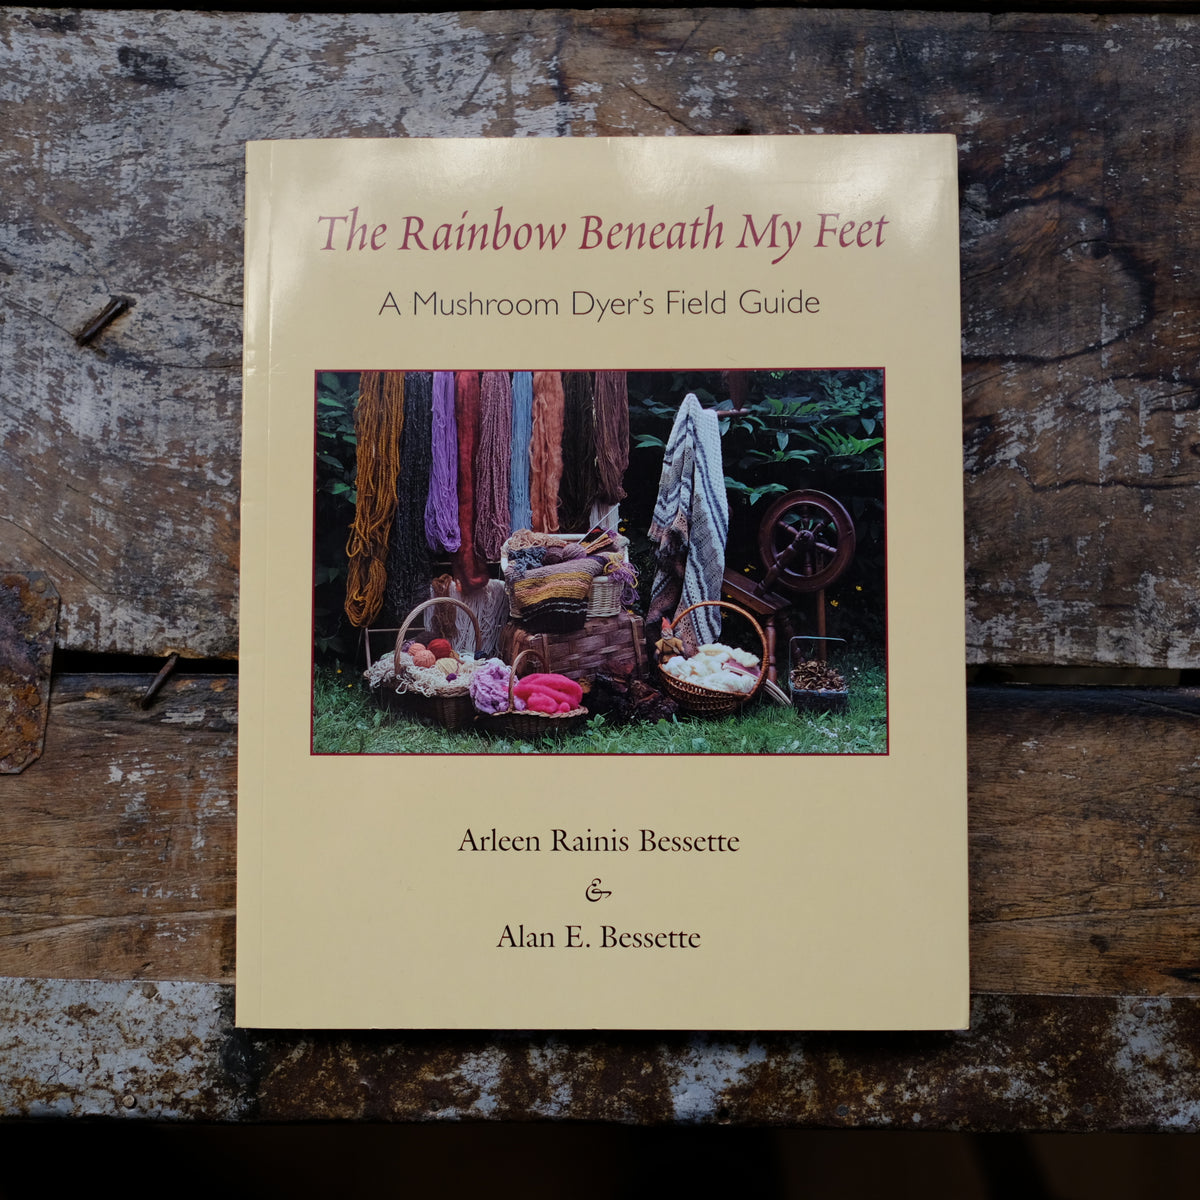 The Rainbow Beneath My Feet: A Mushroom Dyer's Field Guide by Arleen Rainis Bessette & Alan E. Bessette